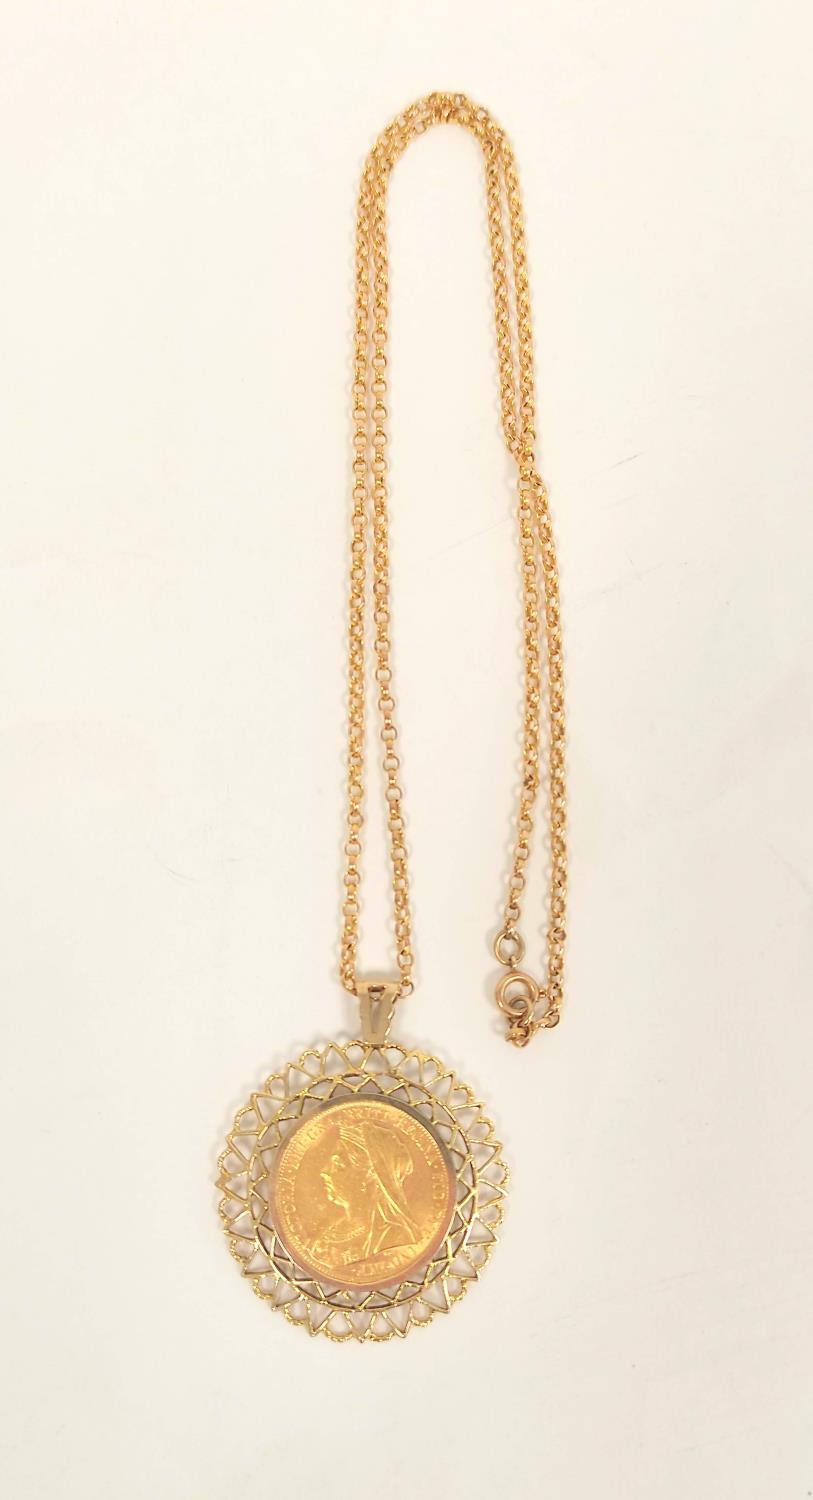 Sovereign 1899, 9ct. gold detachable pendant mount and necklet 54cm, gross 18g.